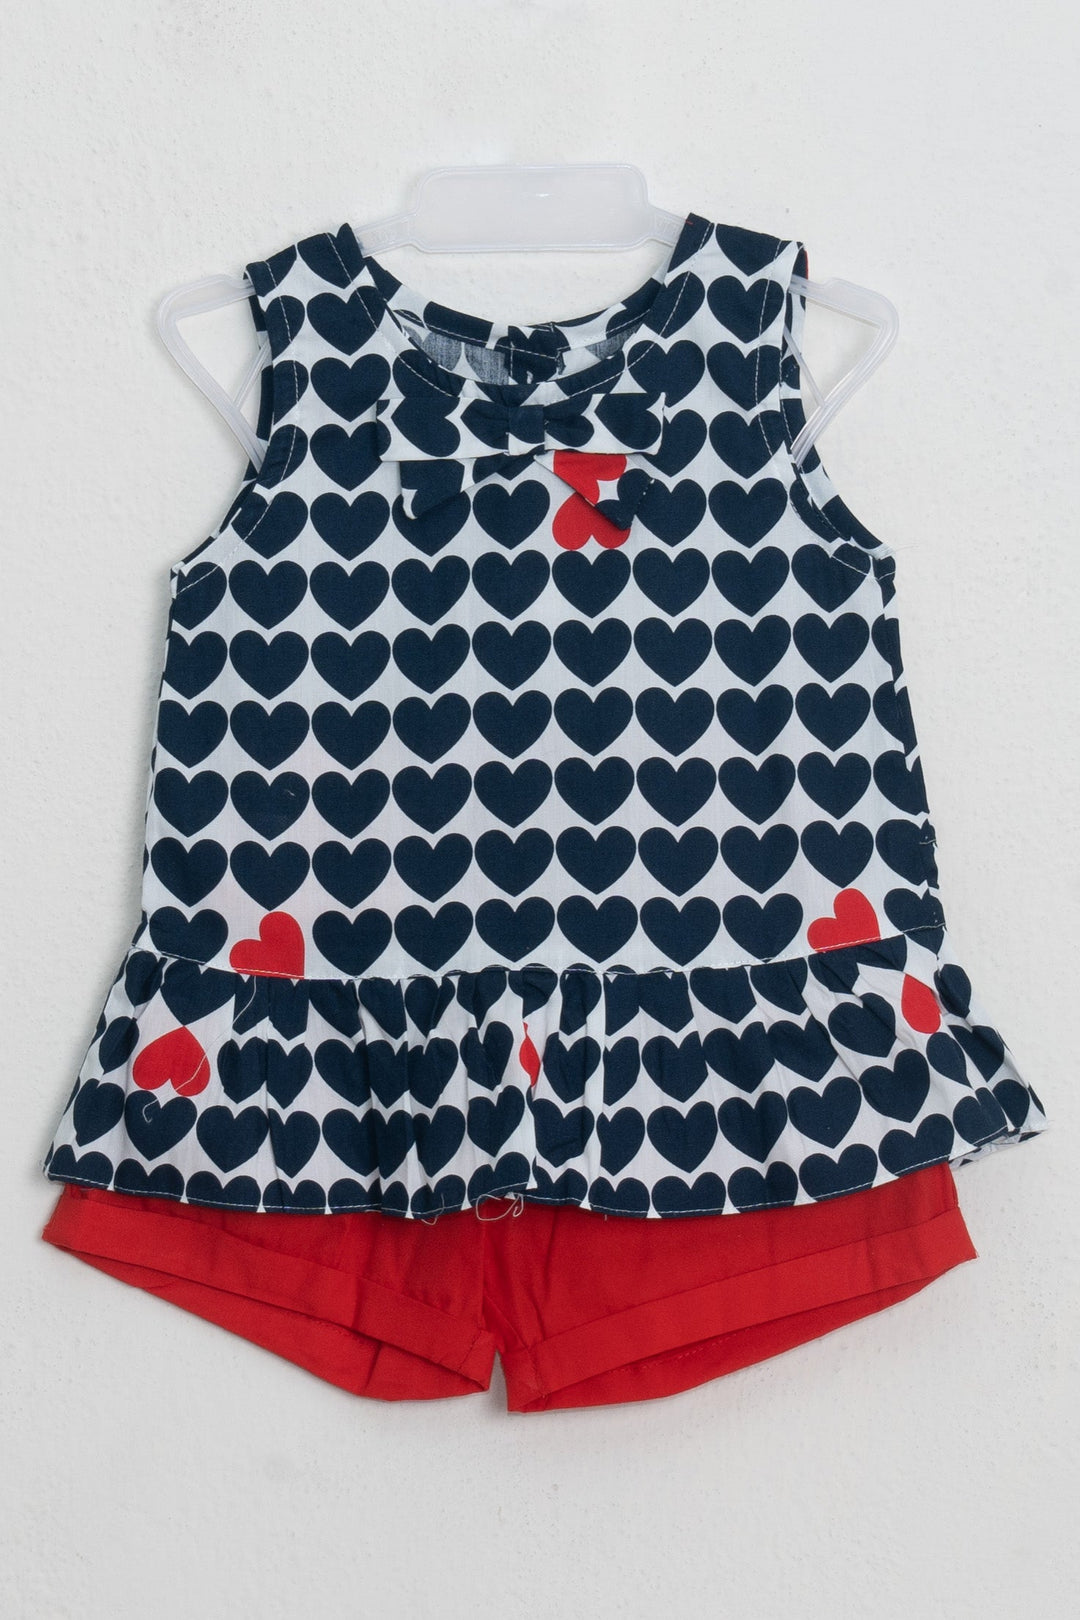 The Nesavu Baby Frock / Jhabla Stunning Navy Blue Heartin Printed Sleeveless Top With Red Bottom For Baby Girls psr silks Nesavu 14 (1Y) / Blue BFJ383A